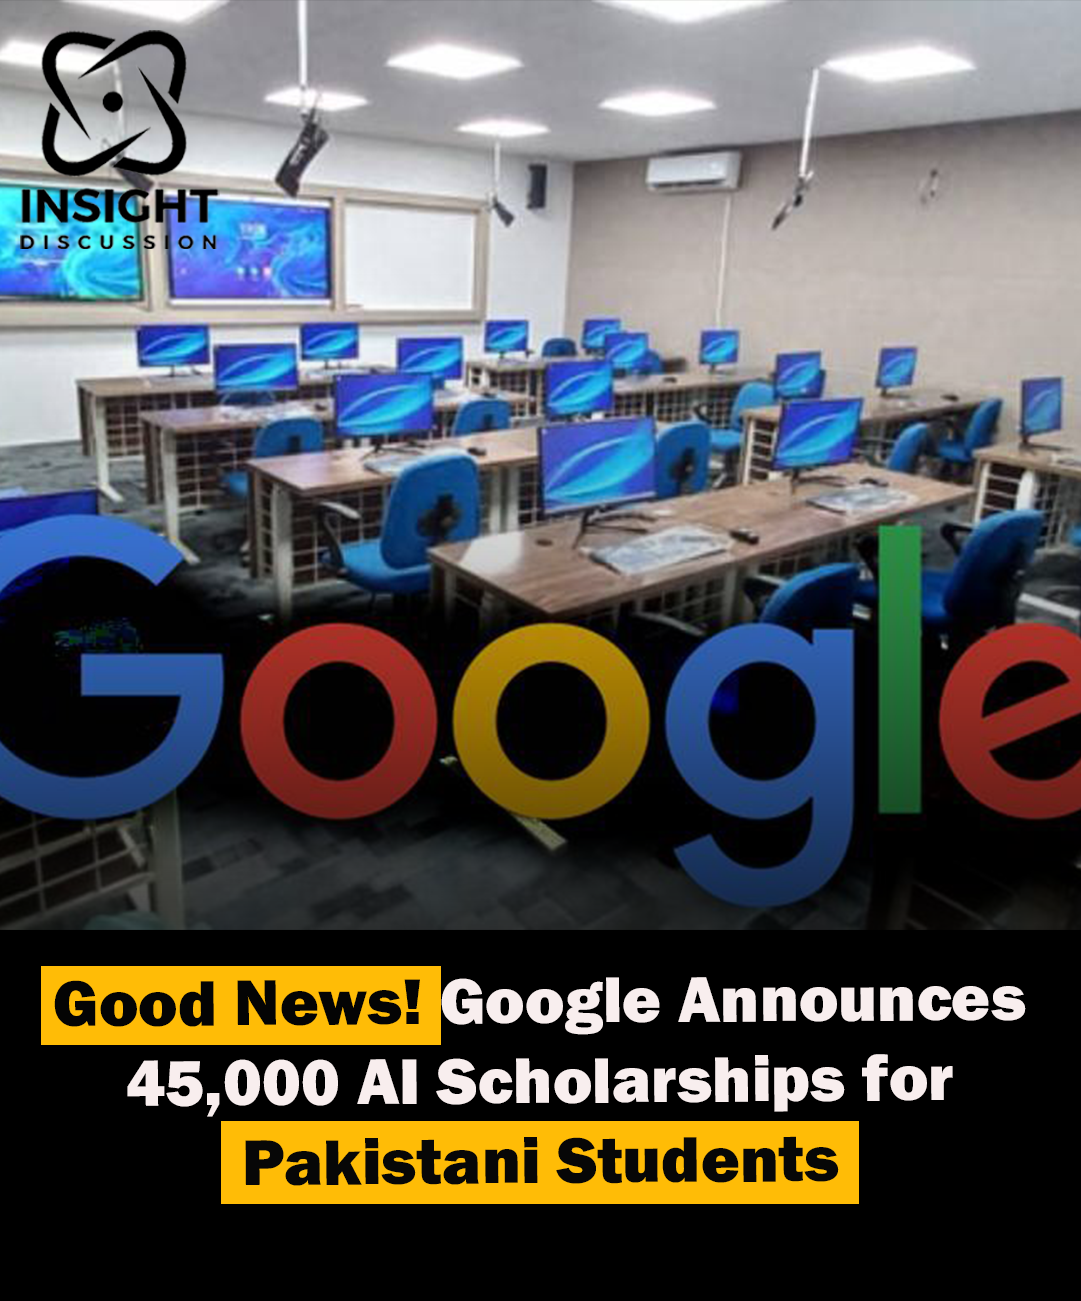 Google’s Generosity: 45,000 AI Scholarships for Pakistani Students